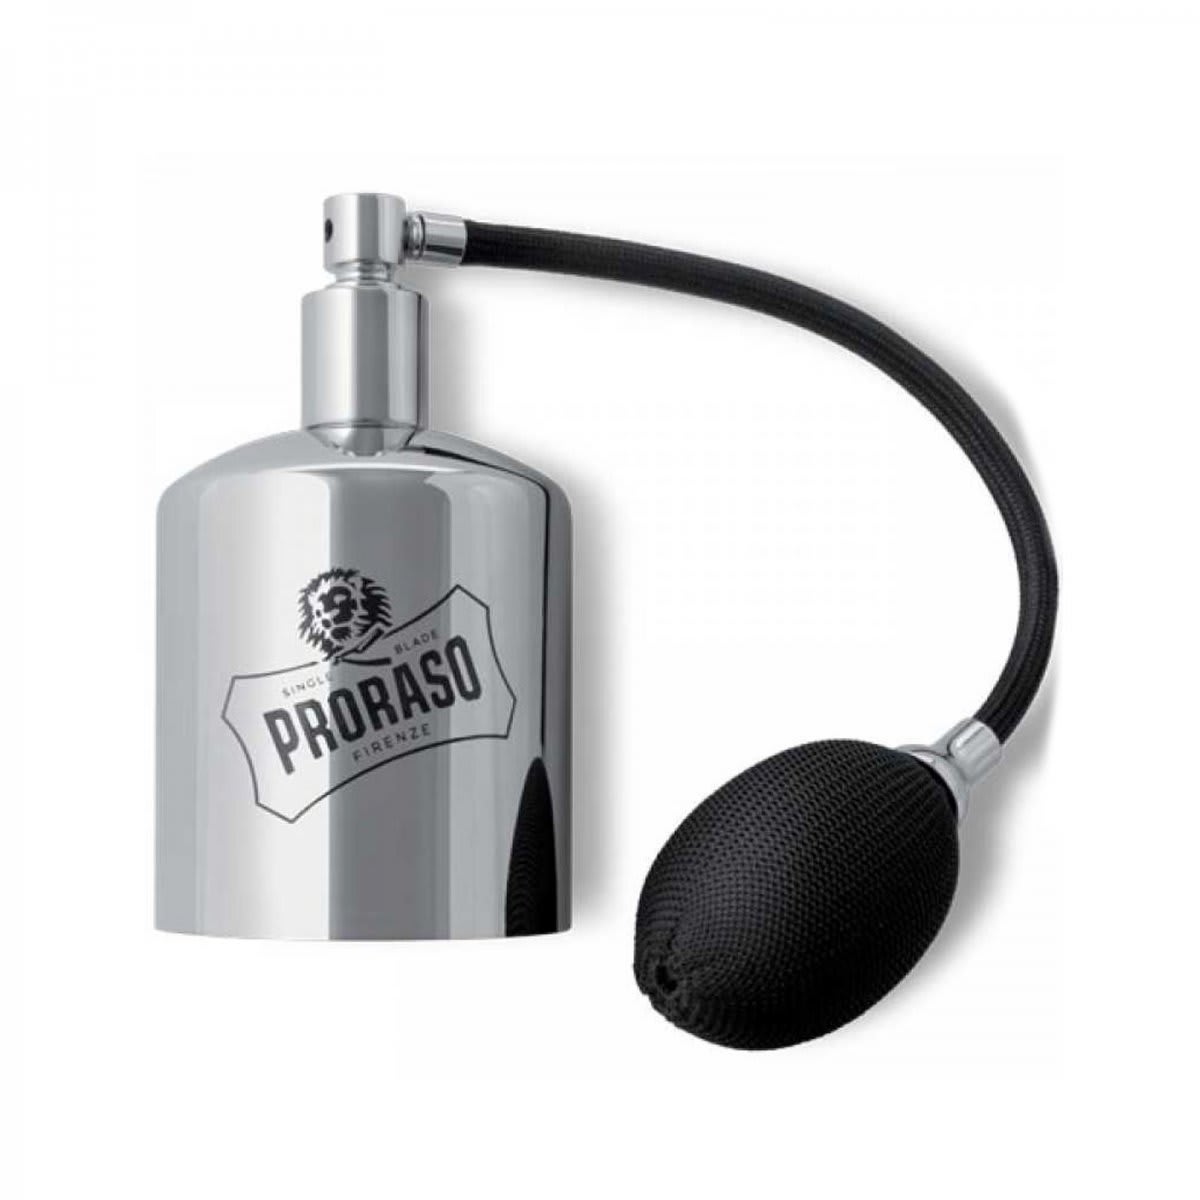 Proraso Sprayer for Cologne or Beard Oil Flakong